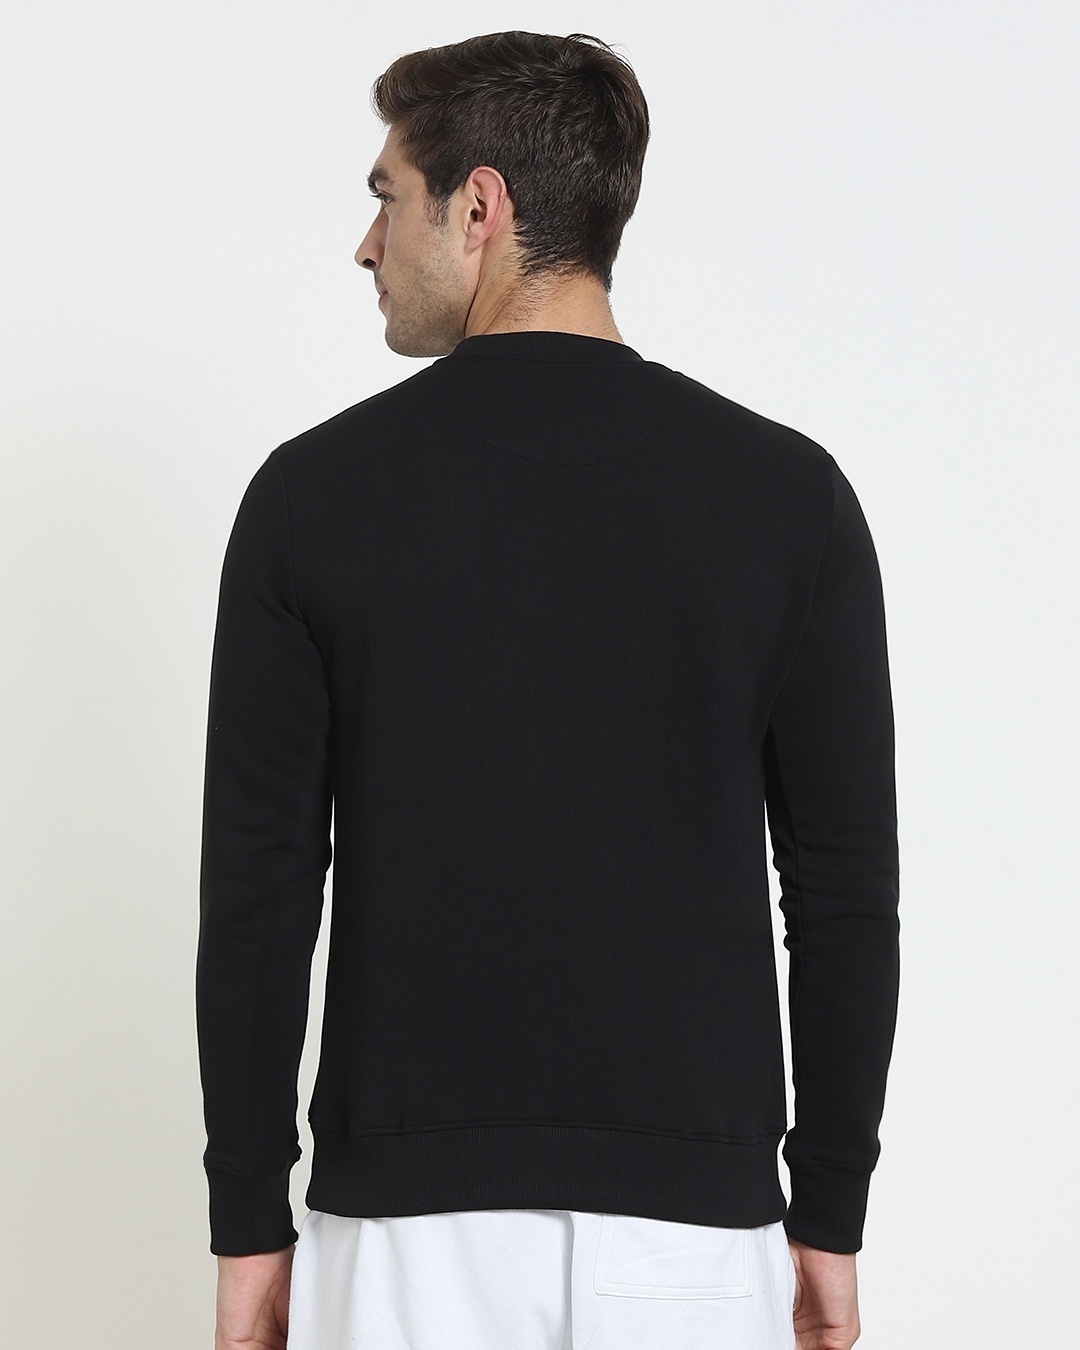 Shop Black Crew Neck Sweatshirt-Design